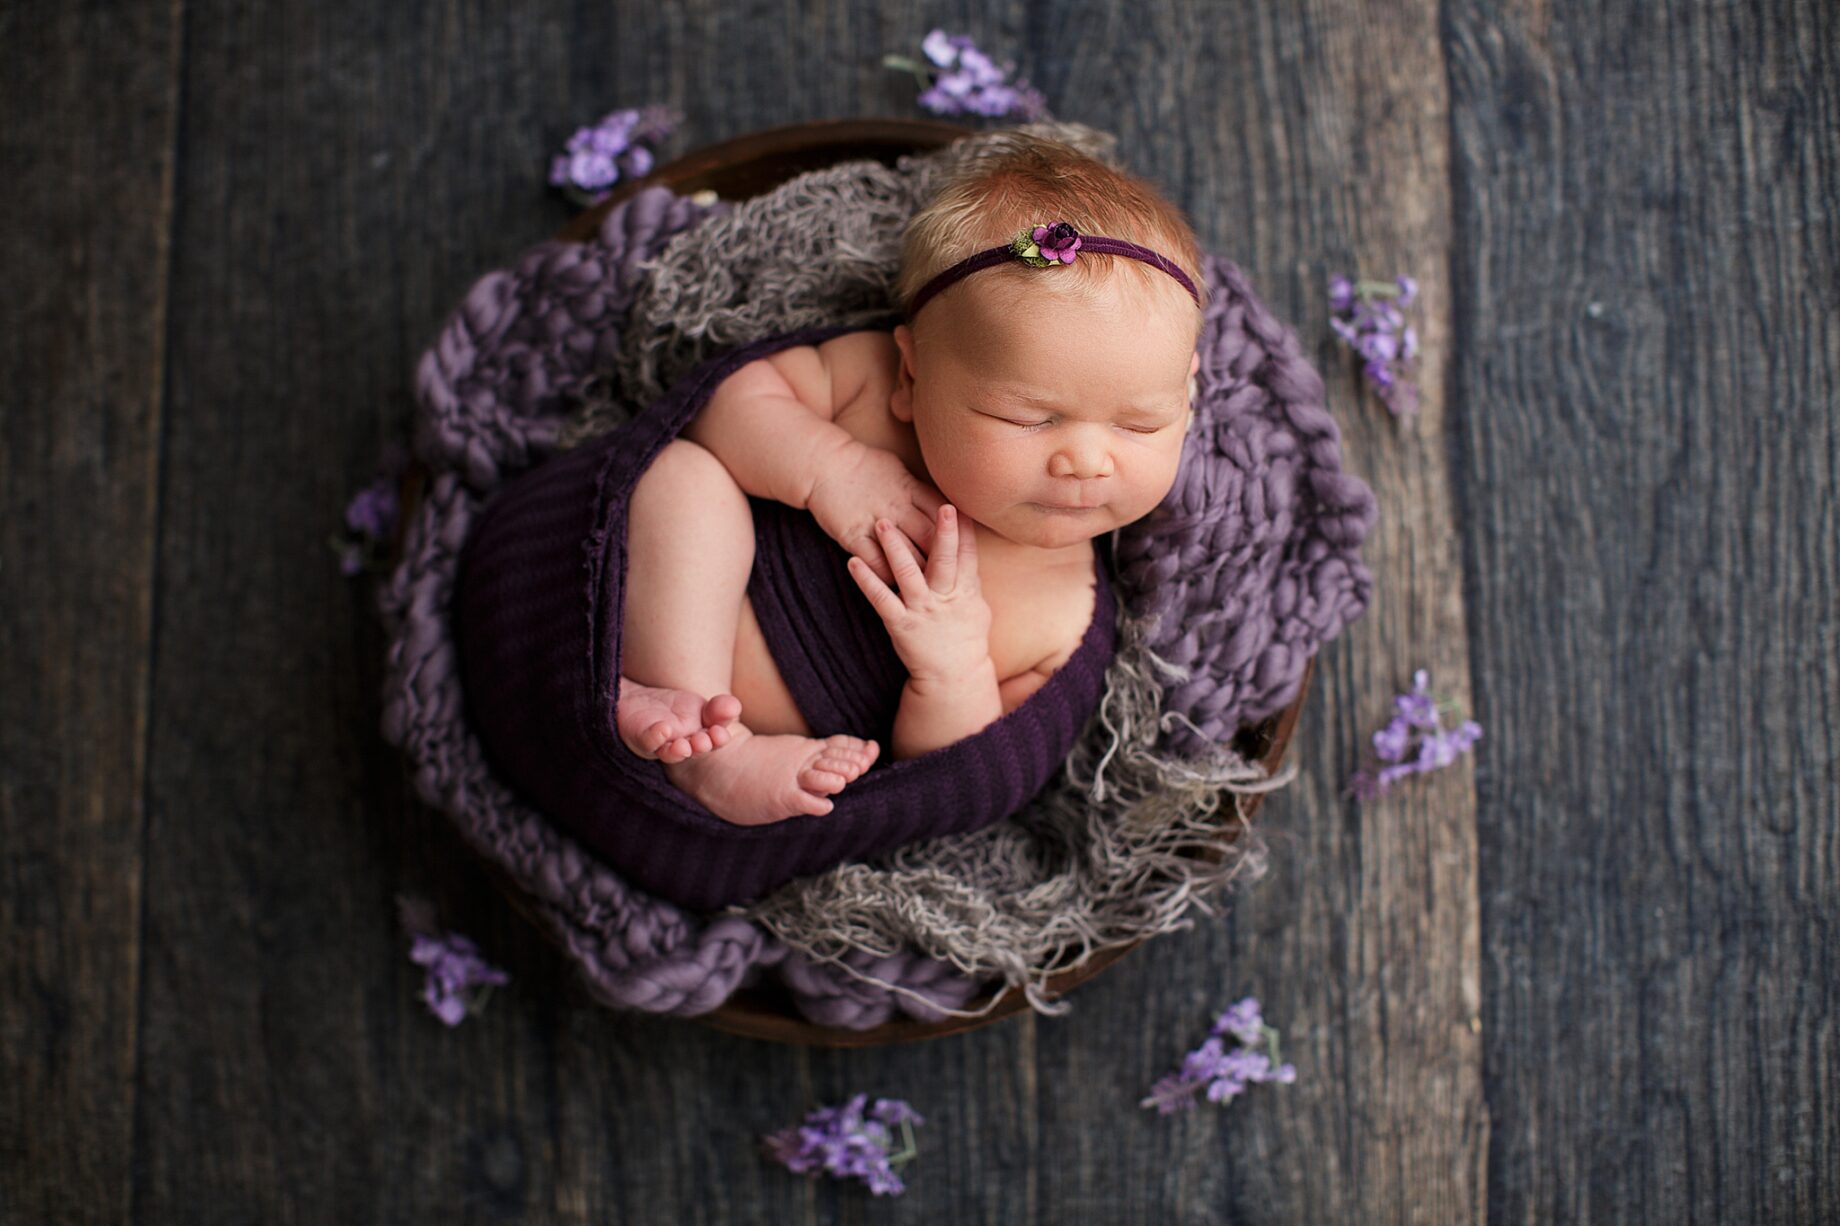 Cape Girardeau newborn photographer, Farmington newborn photographer, perryville newborn photographer, wood backdrop, purple newborn photo setup, violet, blonde hair